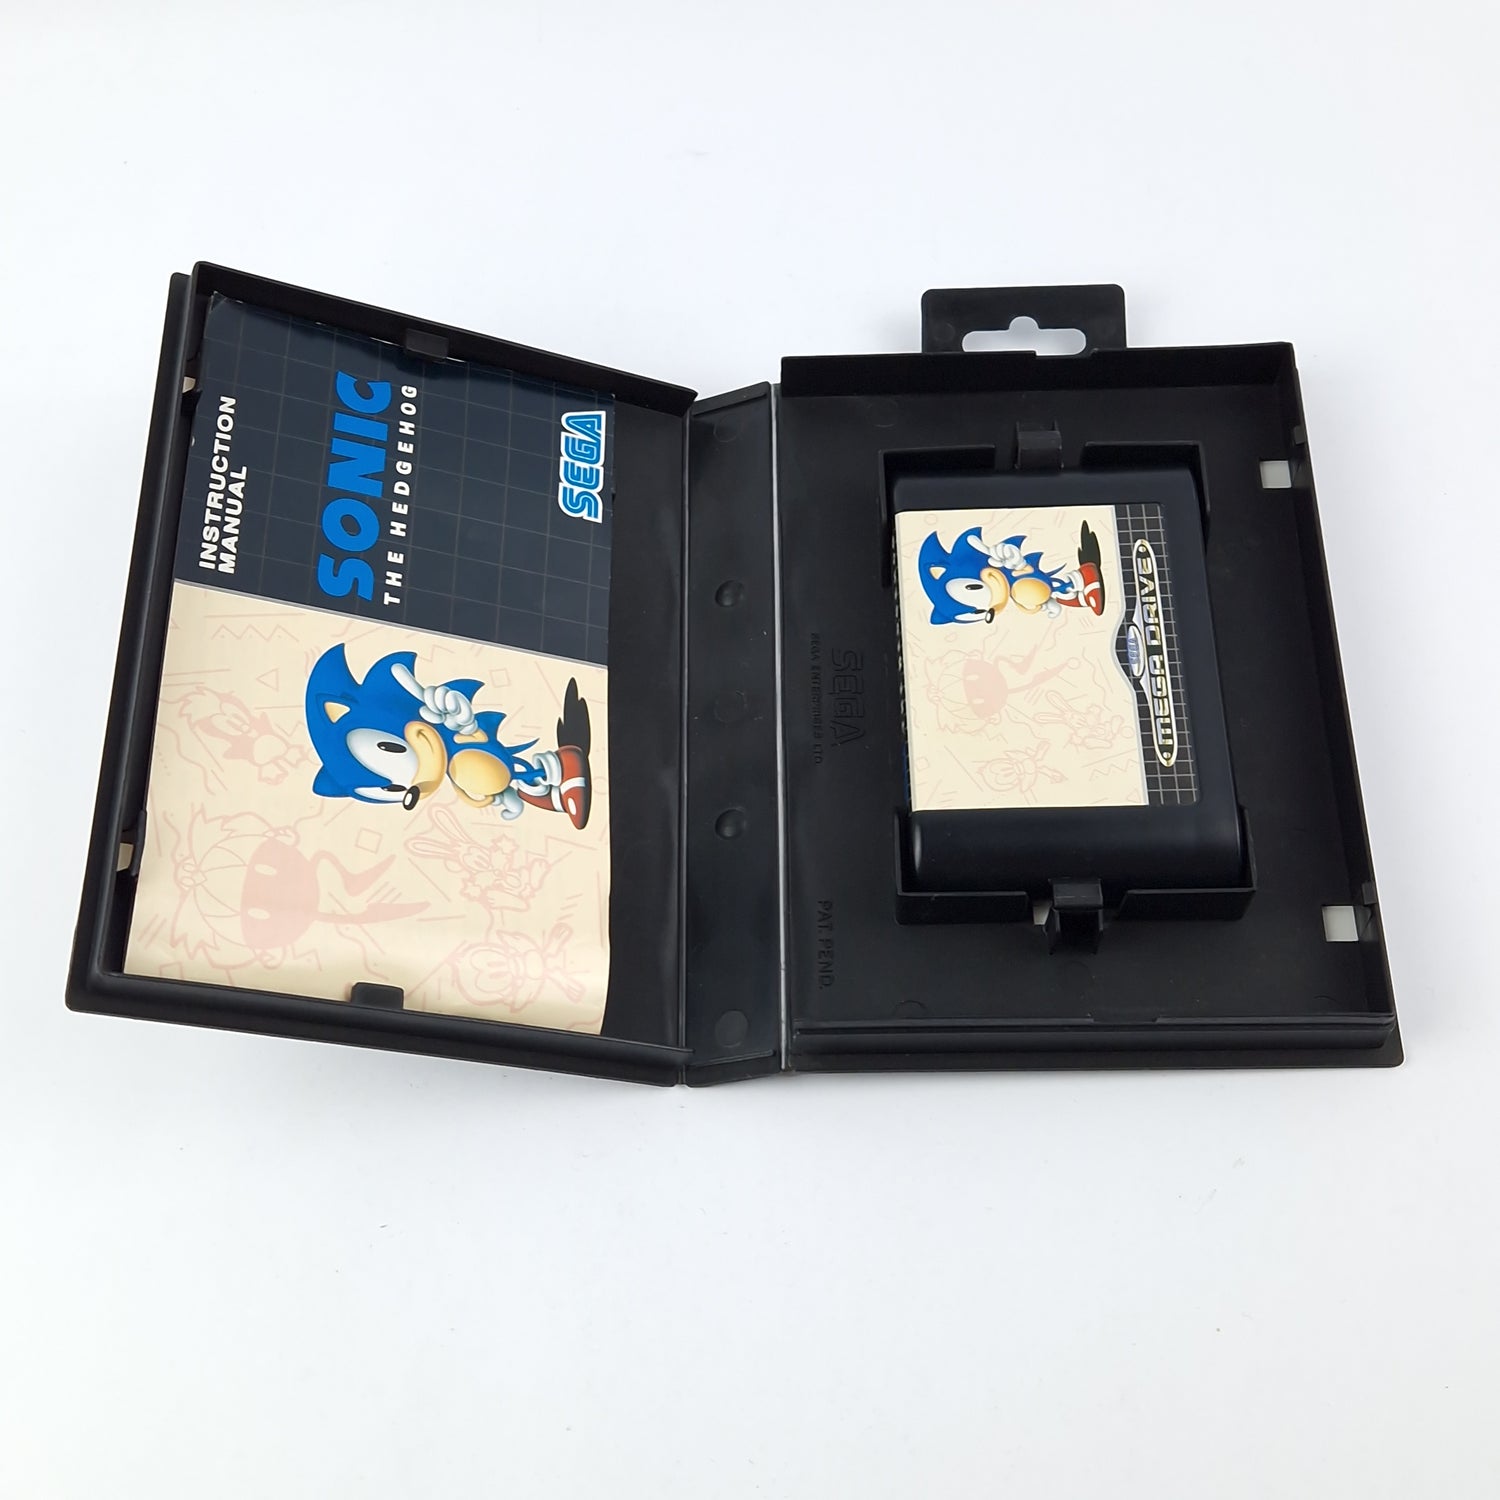 Sega Mega Drive Game: Sonic The Hedgehog - Module Instructions Original Packaging - Very Good Z.